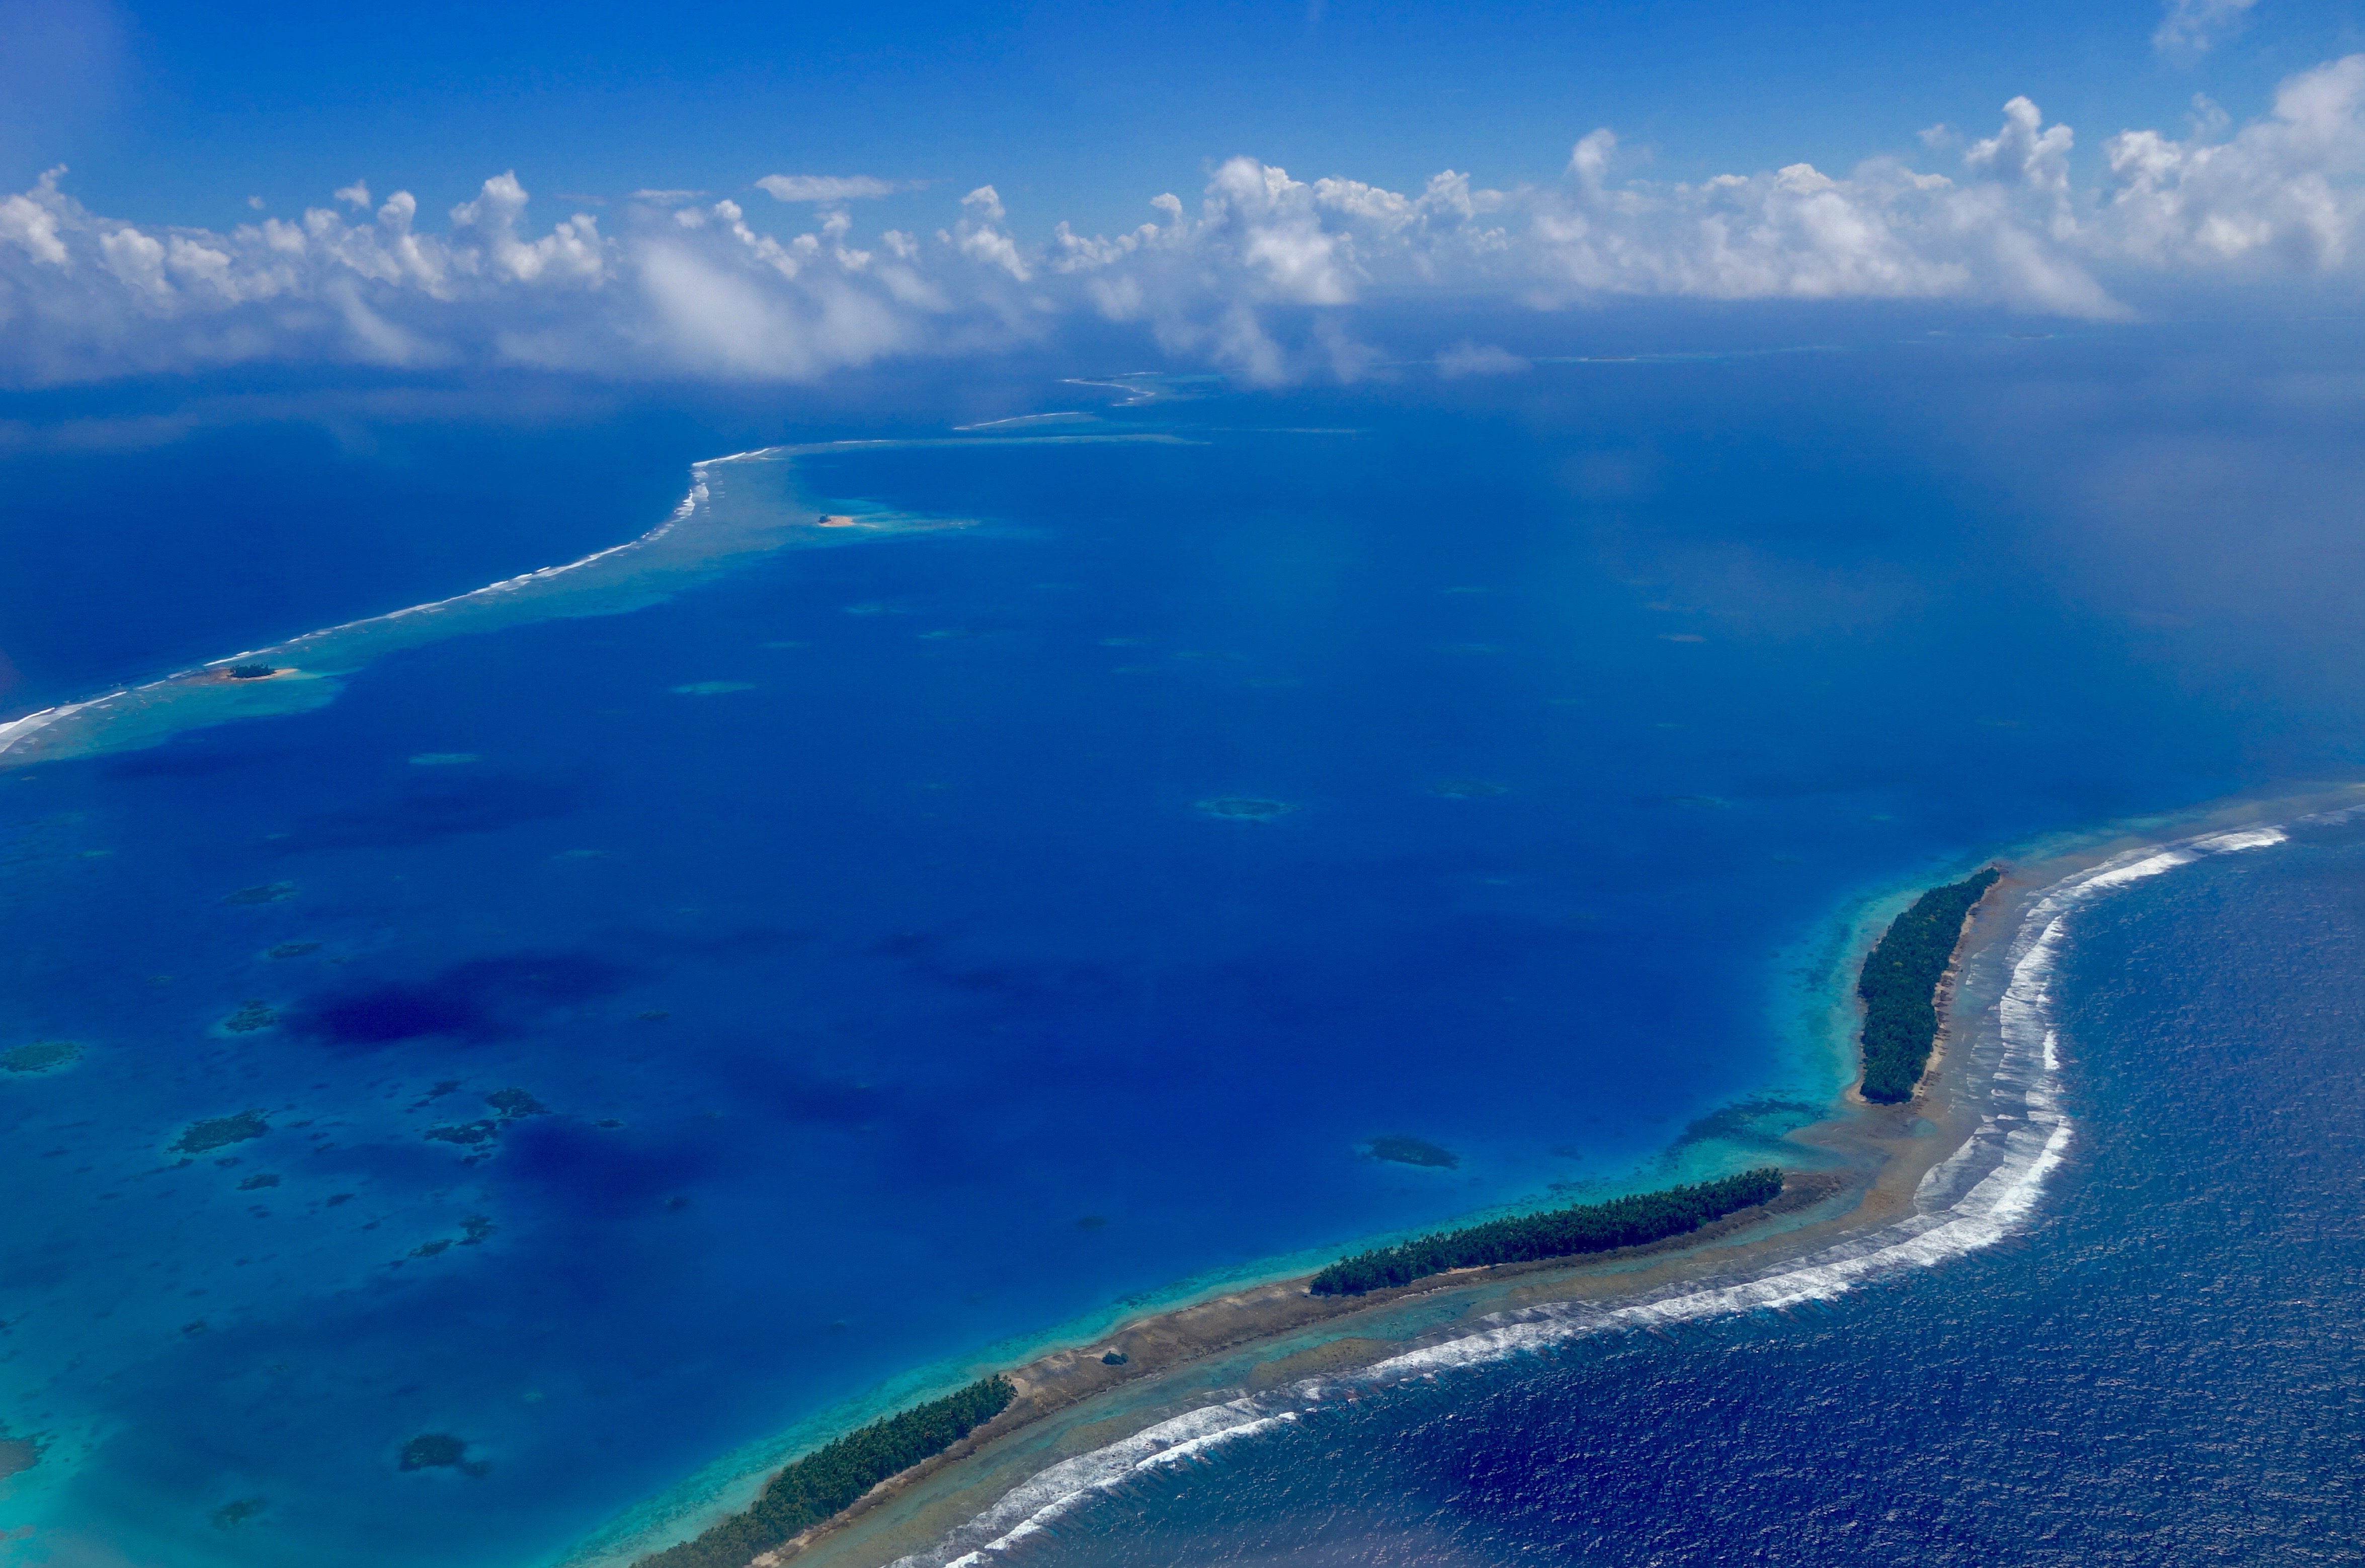 Южная часть тихого океана острова. Остров Фунафути, Тувалу. Атолл Тувалу. Полинезийское государство Тувалу. Атолл в тихом океане.